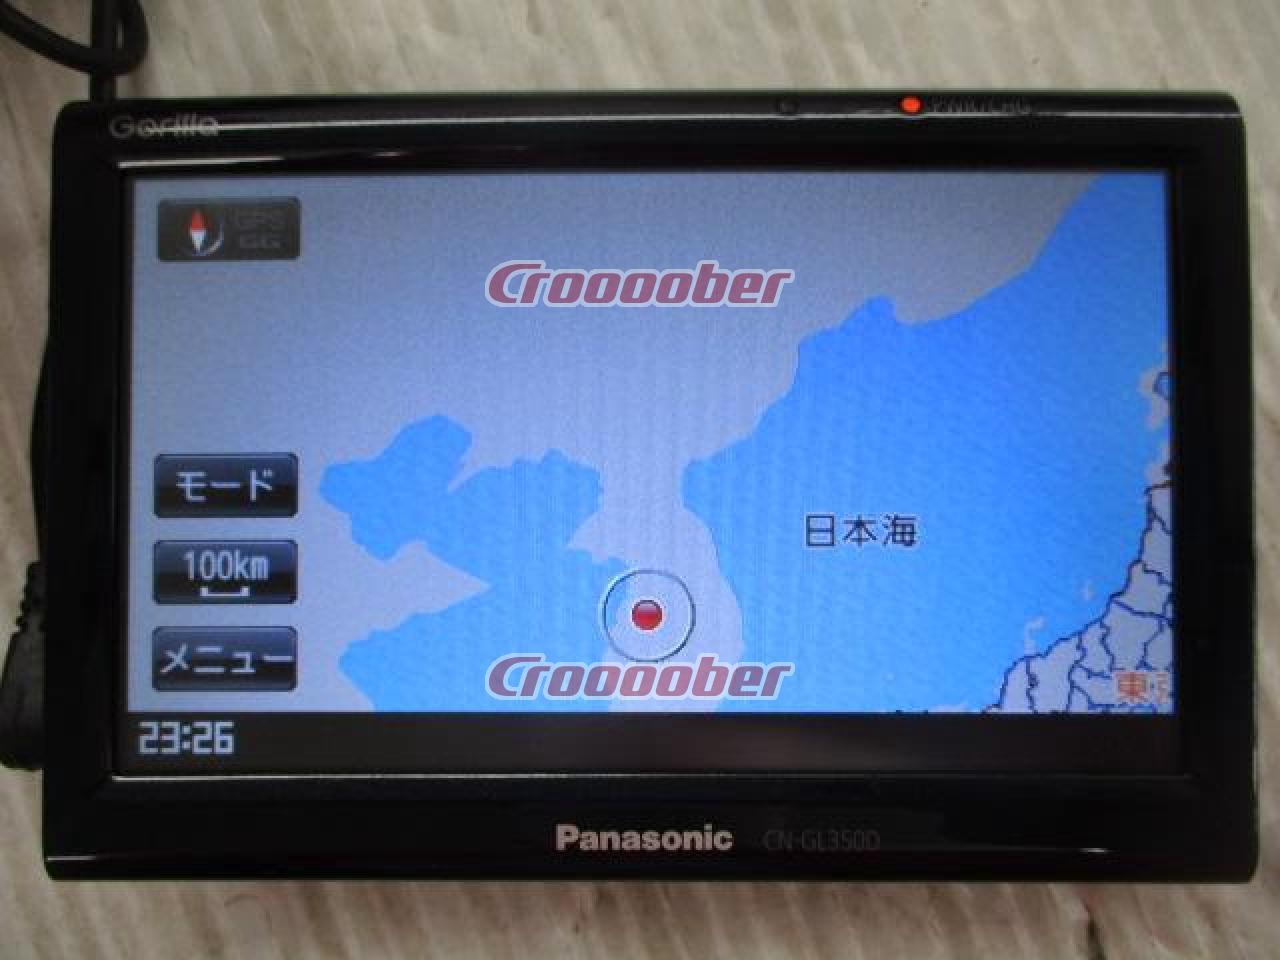 Panasonic Gorilla CN-GL350D | Portable Memory Navigation(digital) |  Croooober